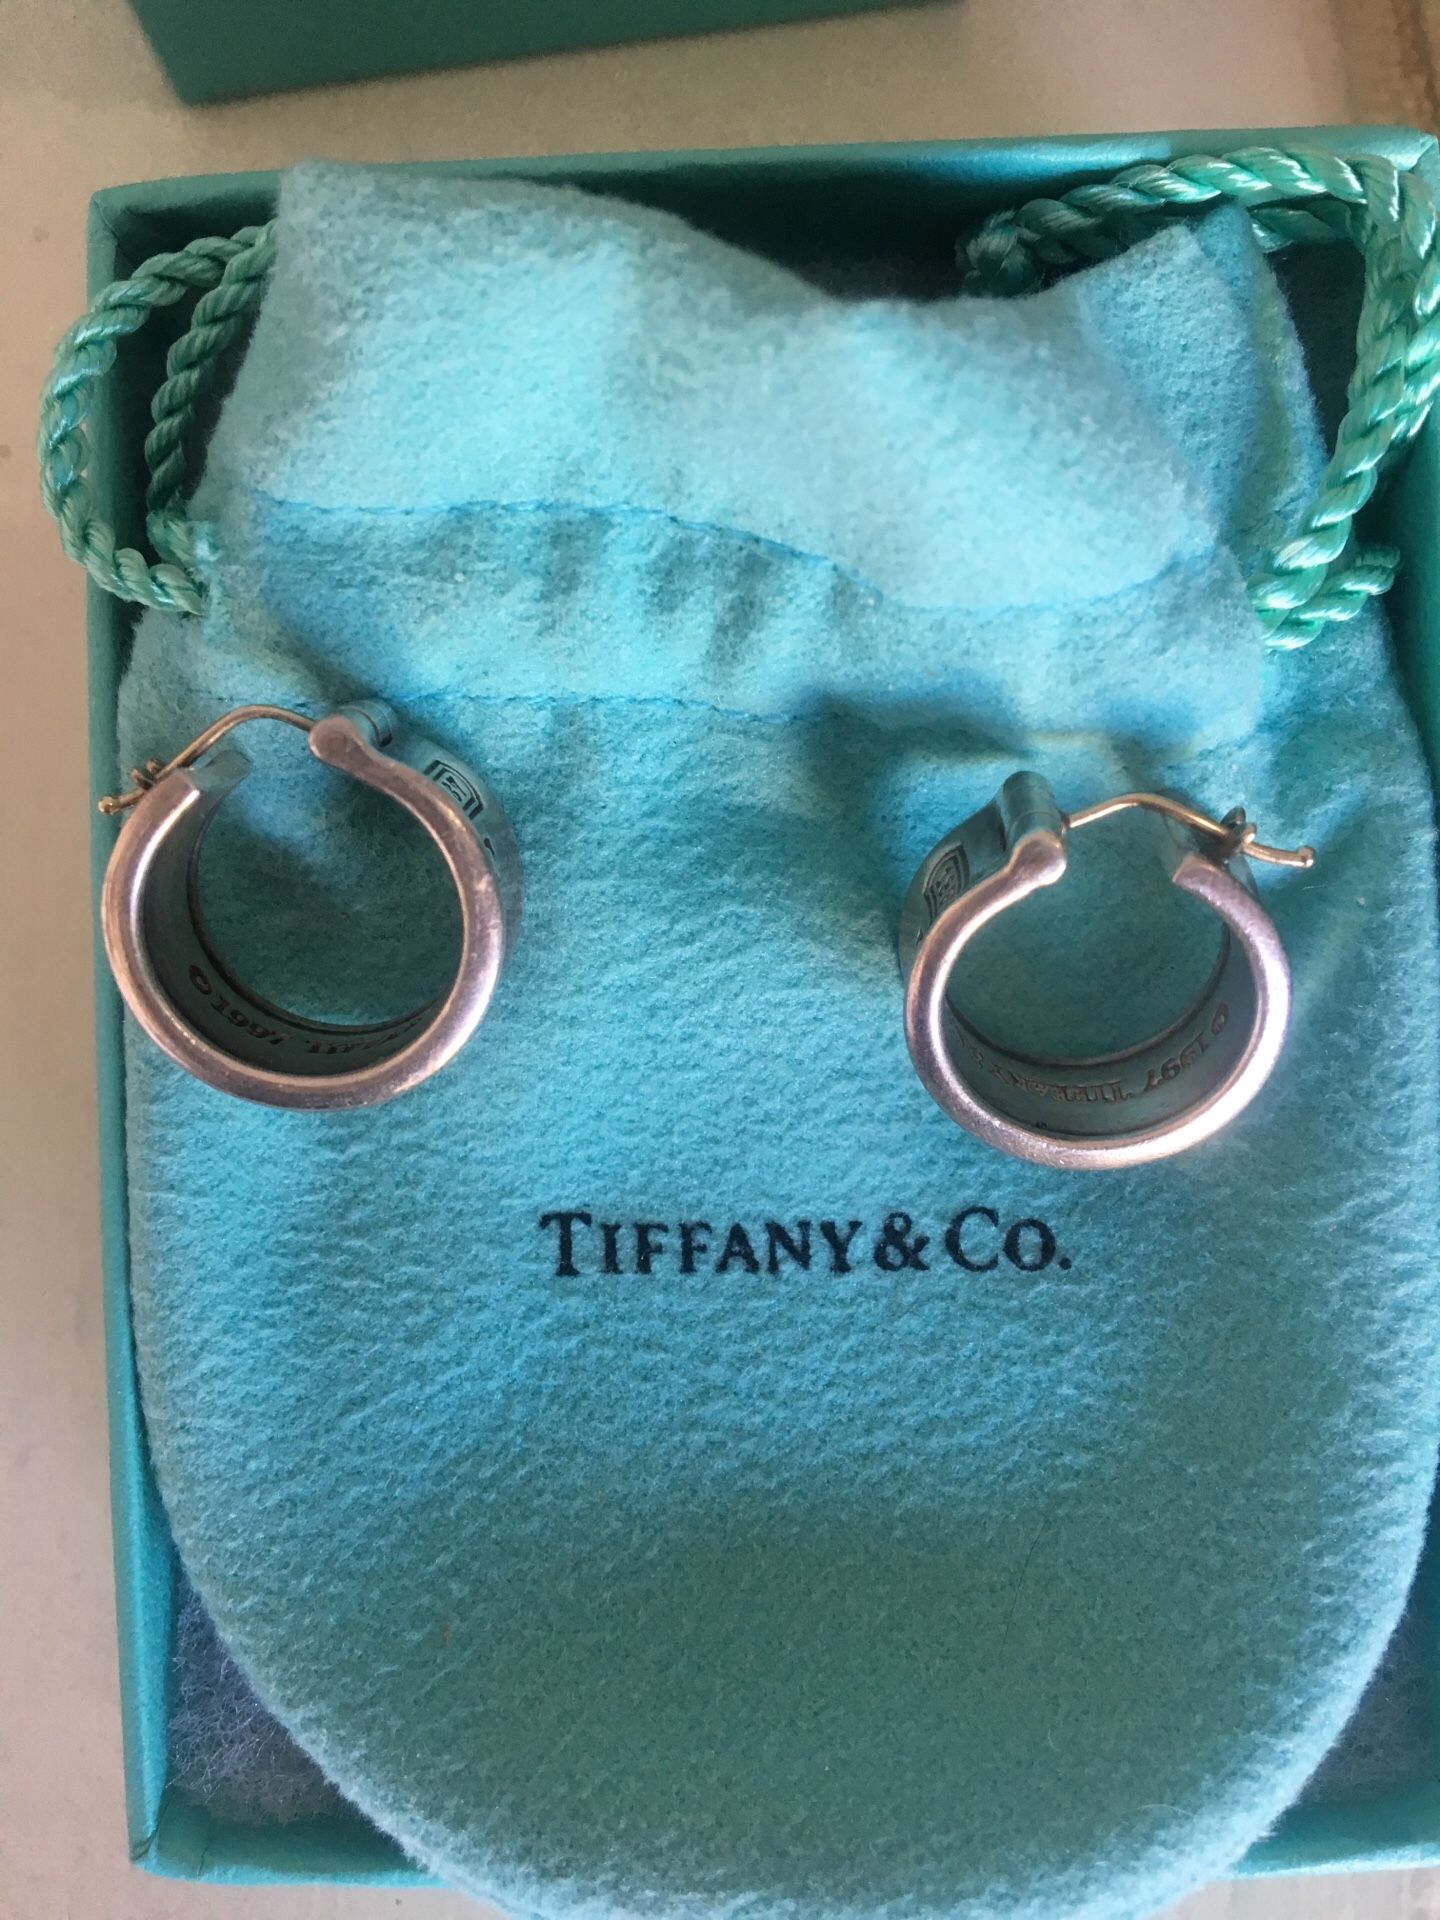 Tiffany and co earrings